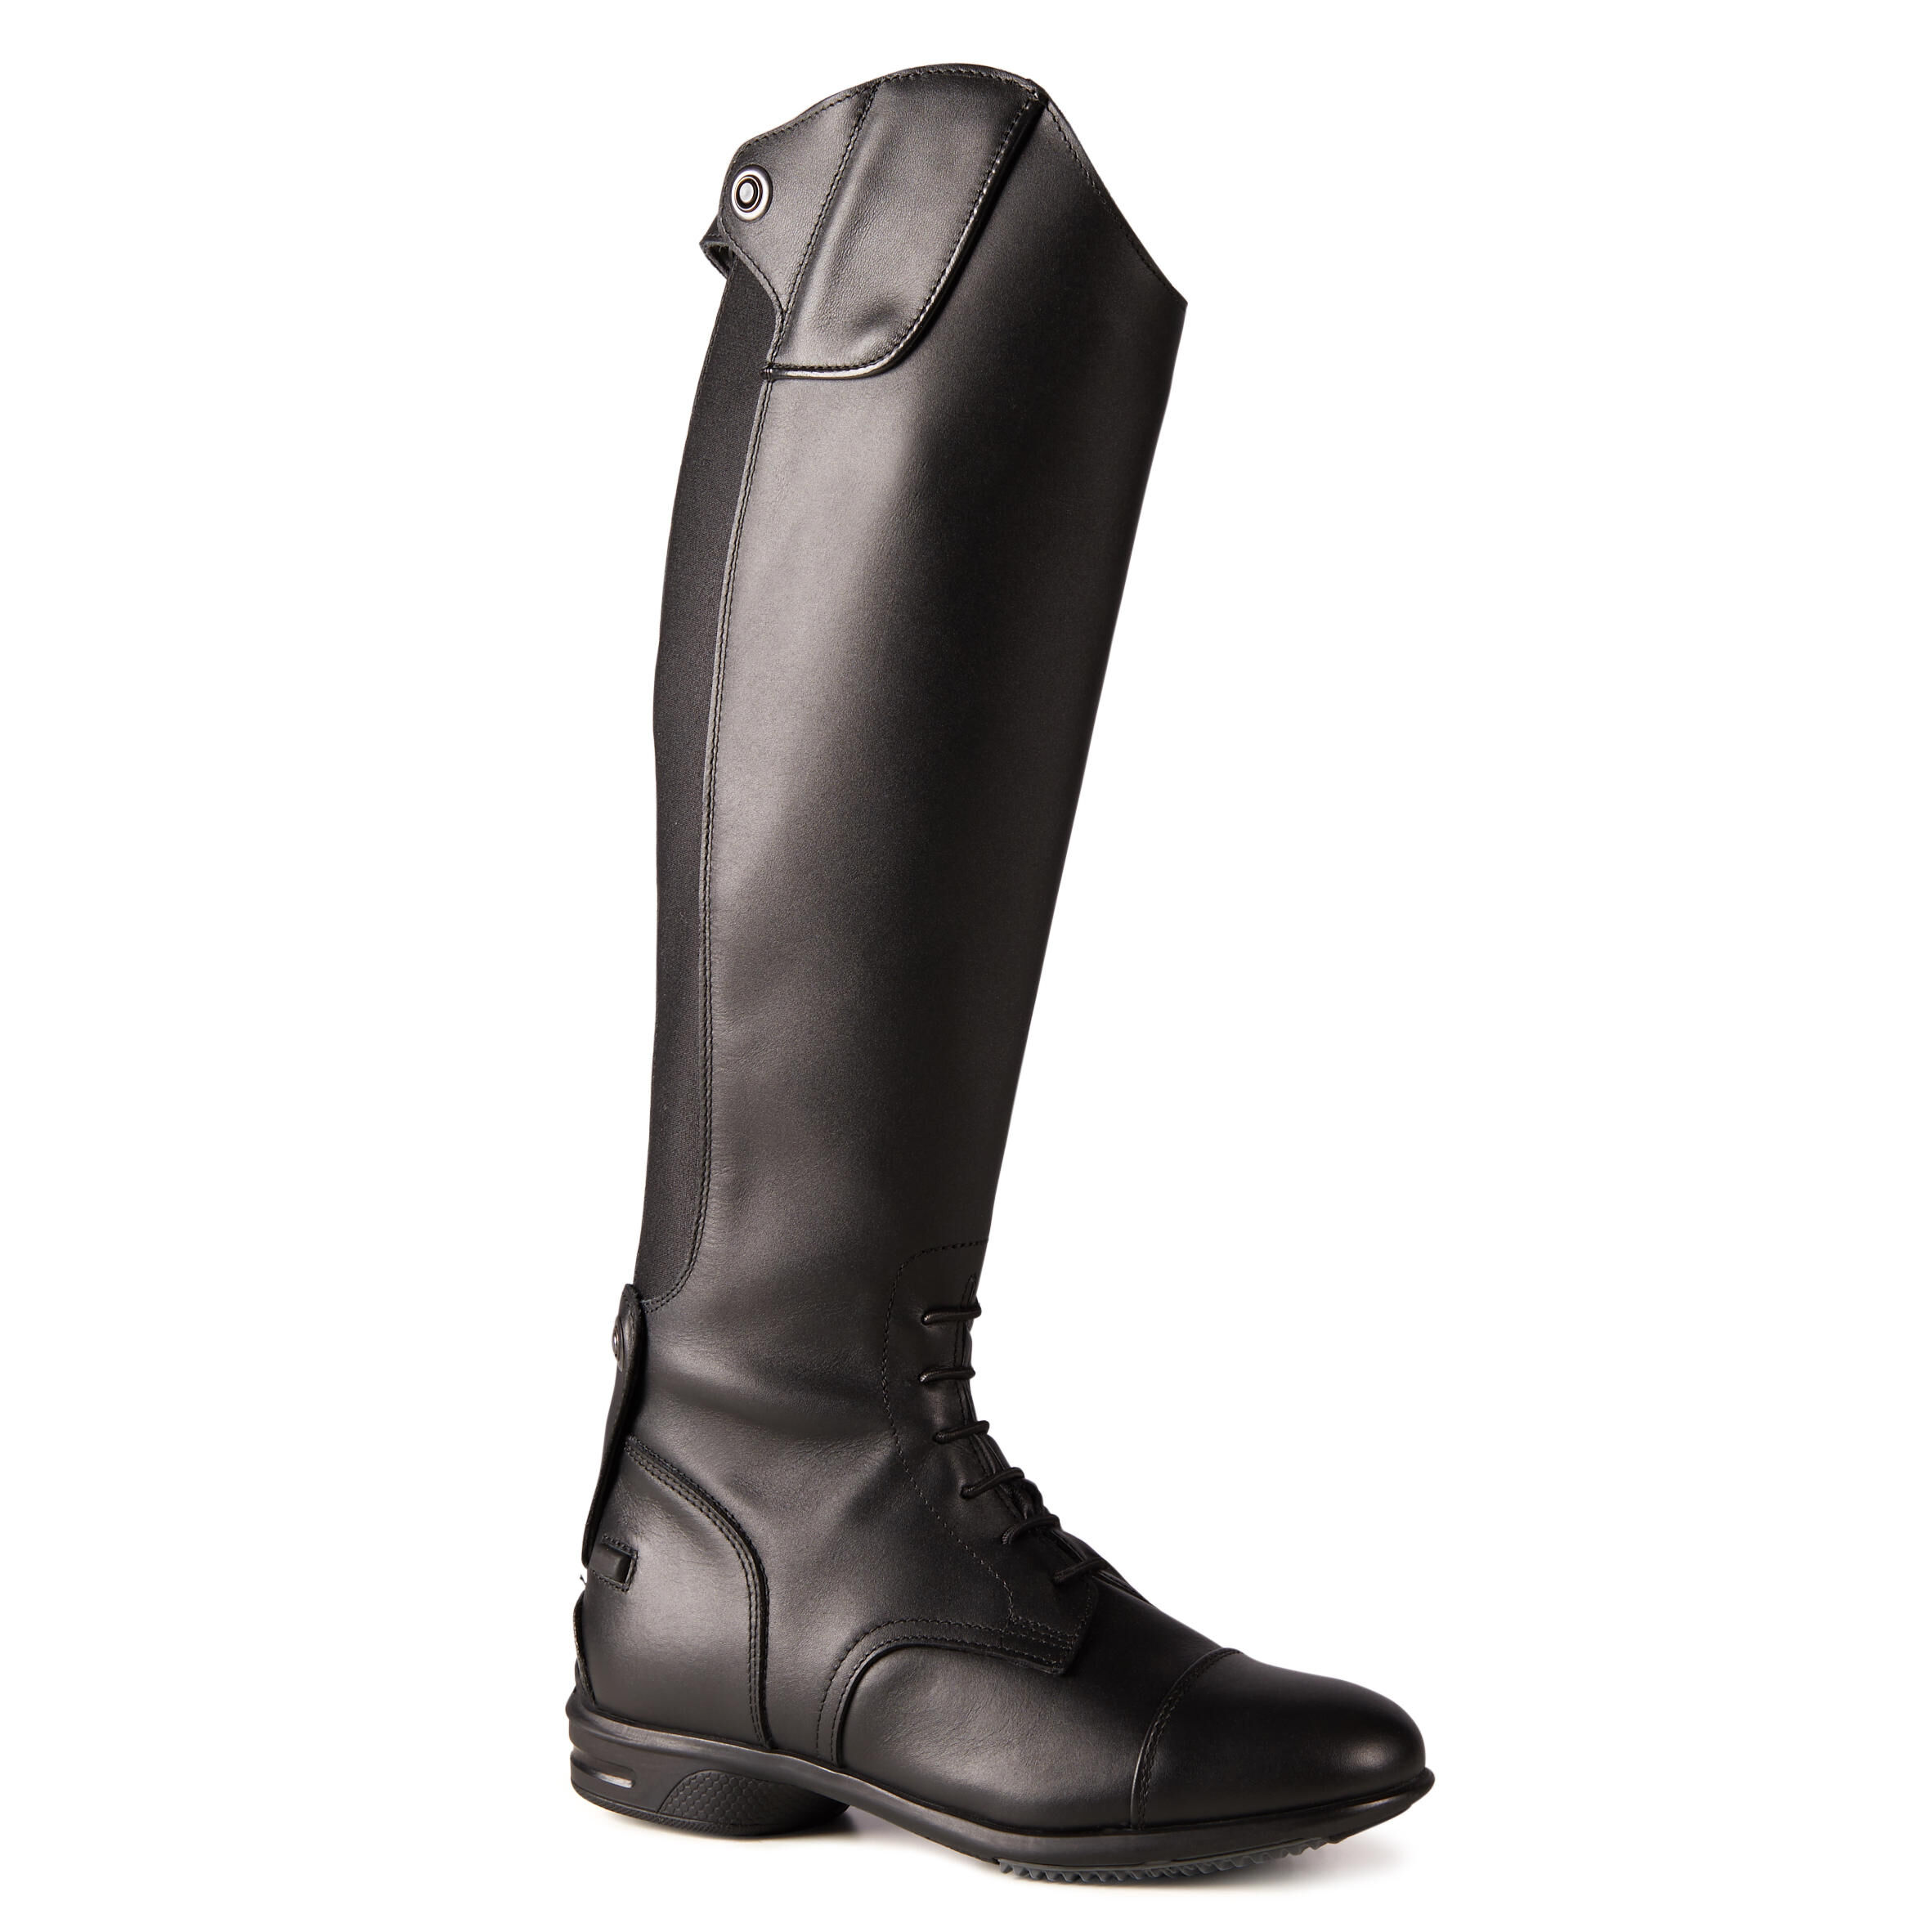 FOUGANZA Adult Equestrian Boots 900 Jump Second Choice Calf Size M - Black